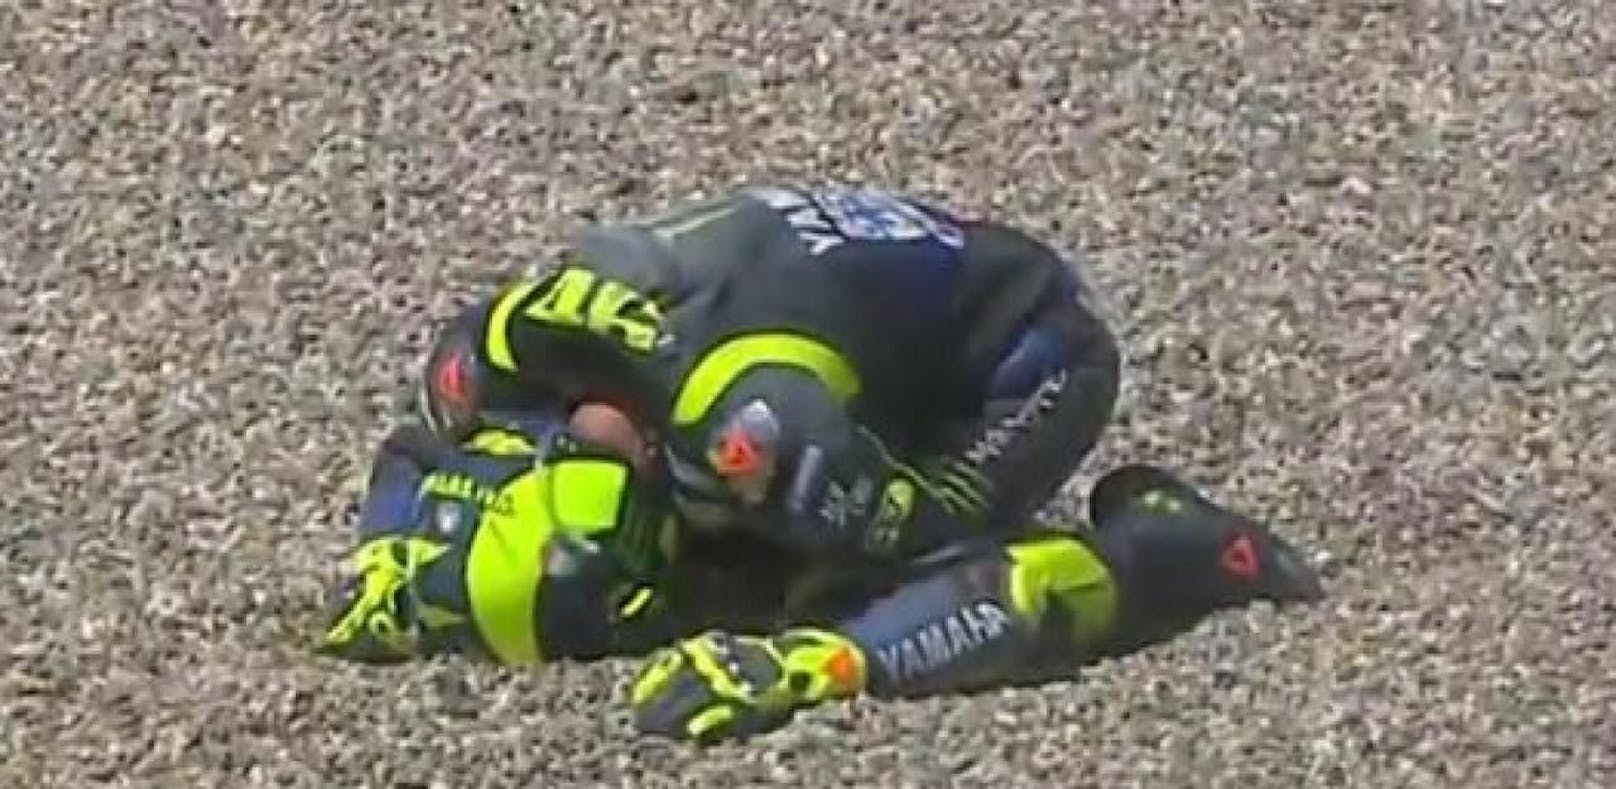 MotoGP: Rossi fliegt in Assen ab, Vinales gewinnt